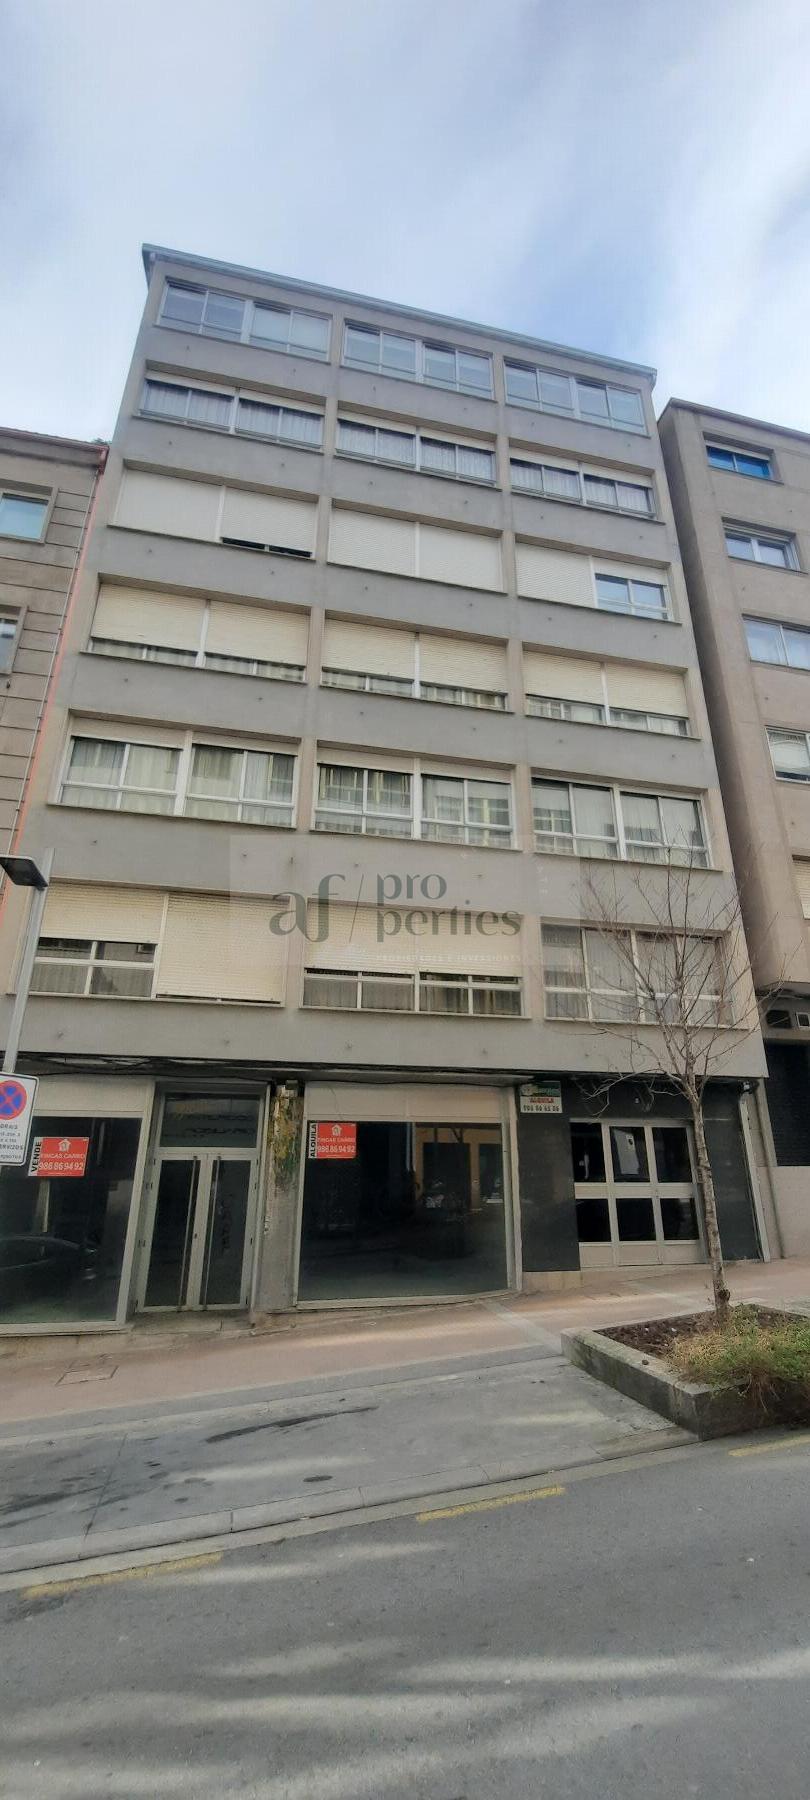 Vendita di appartamento in Pontevedra